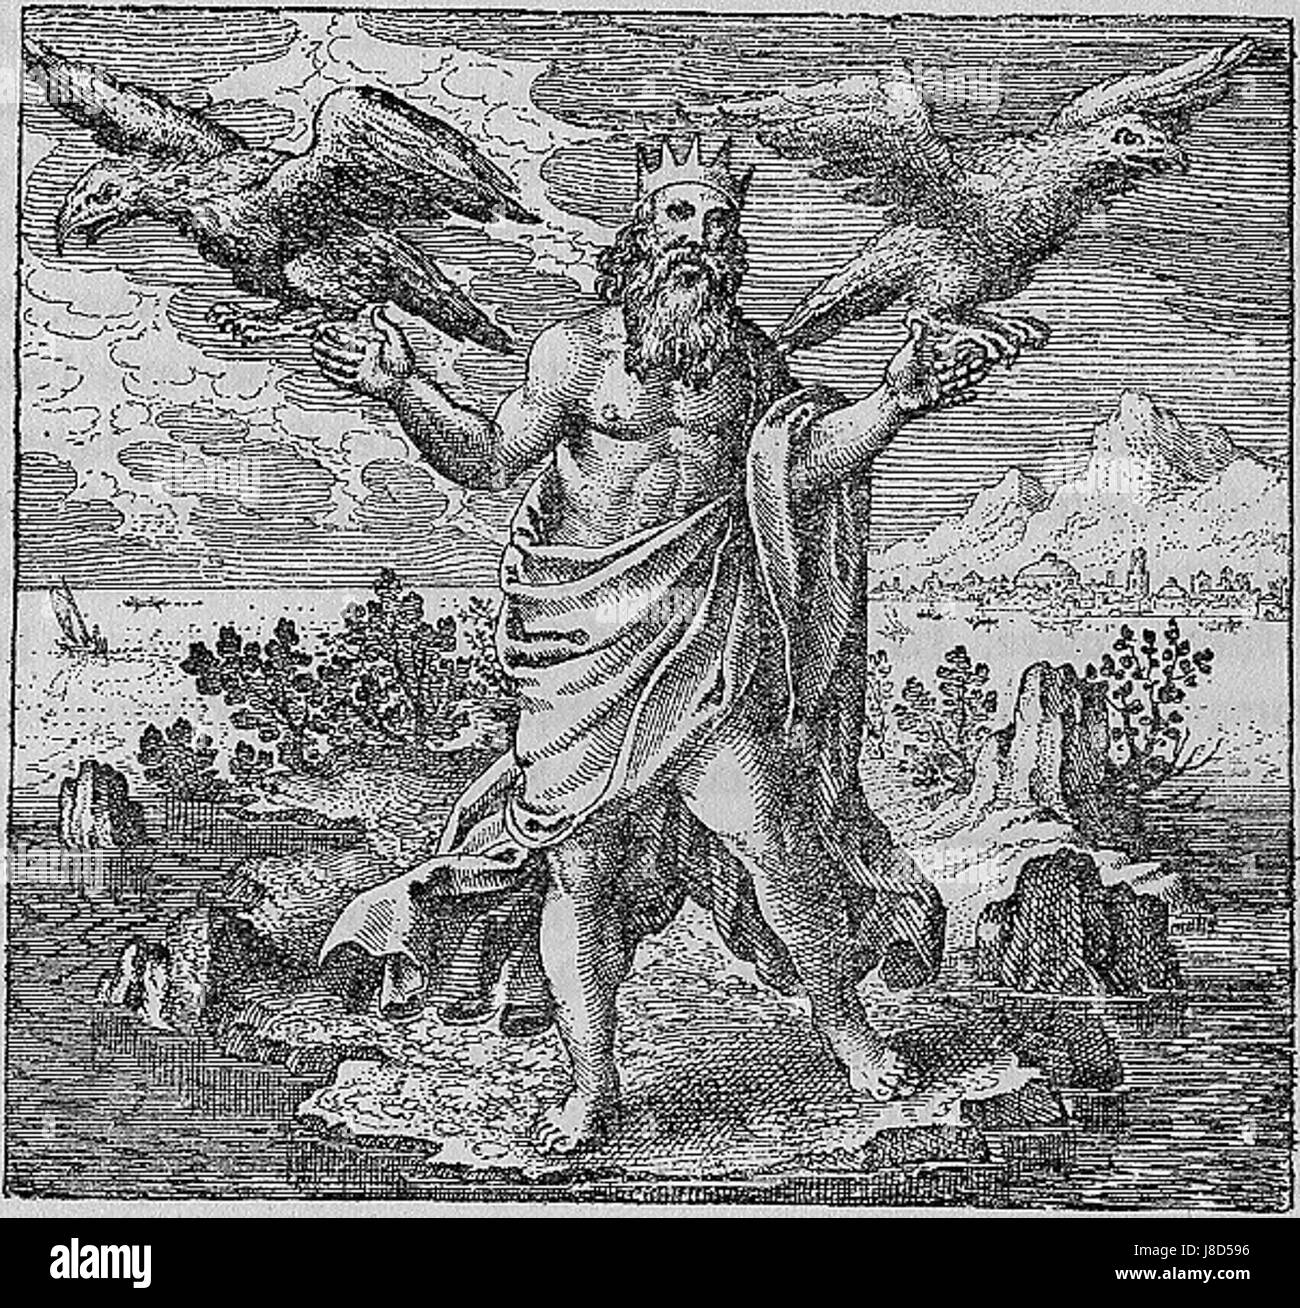 Юпитер это бог. Зевс Бог древней Греции. Римский Бог Юпитер. Зевс Юпитер мифология. Юпитер Бог Рима.